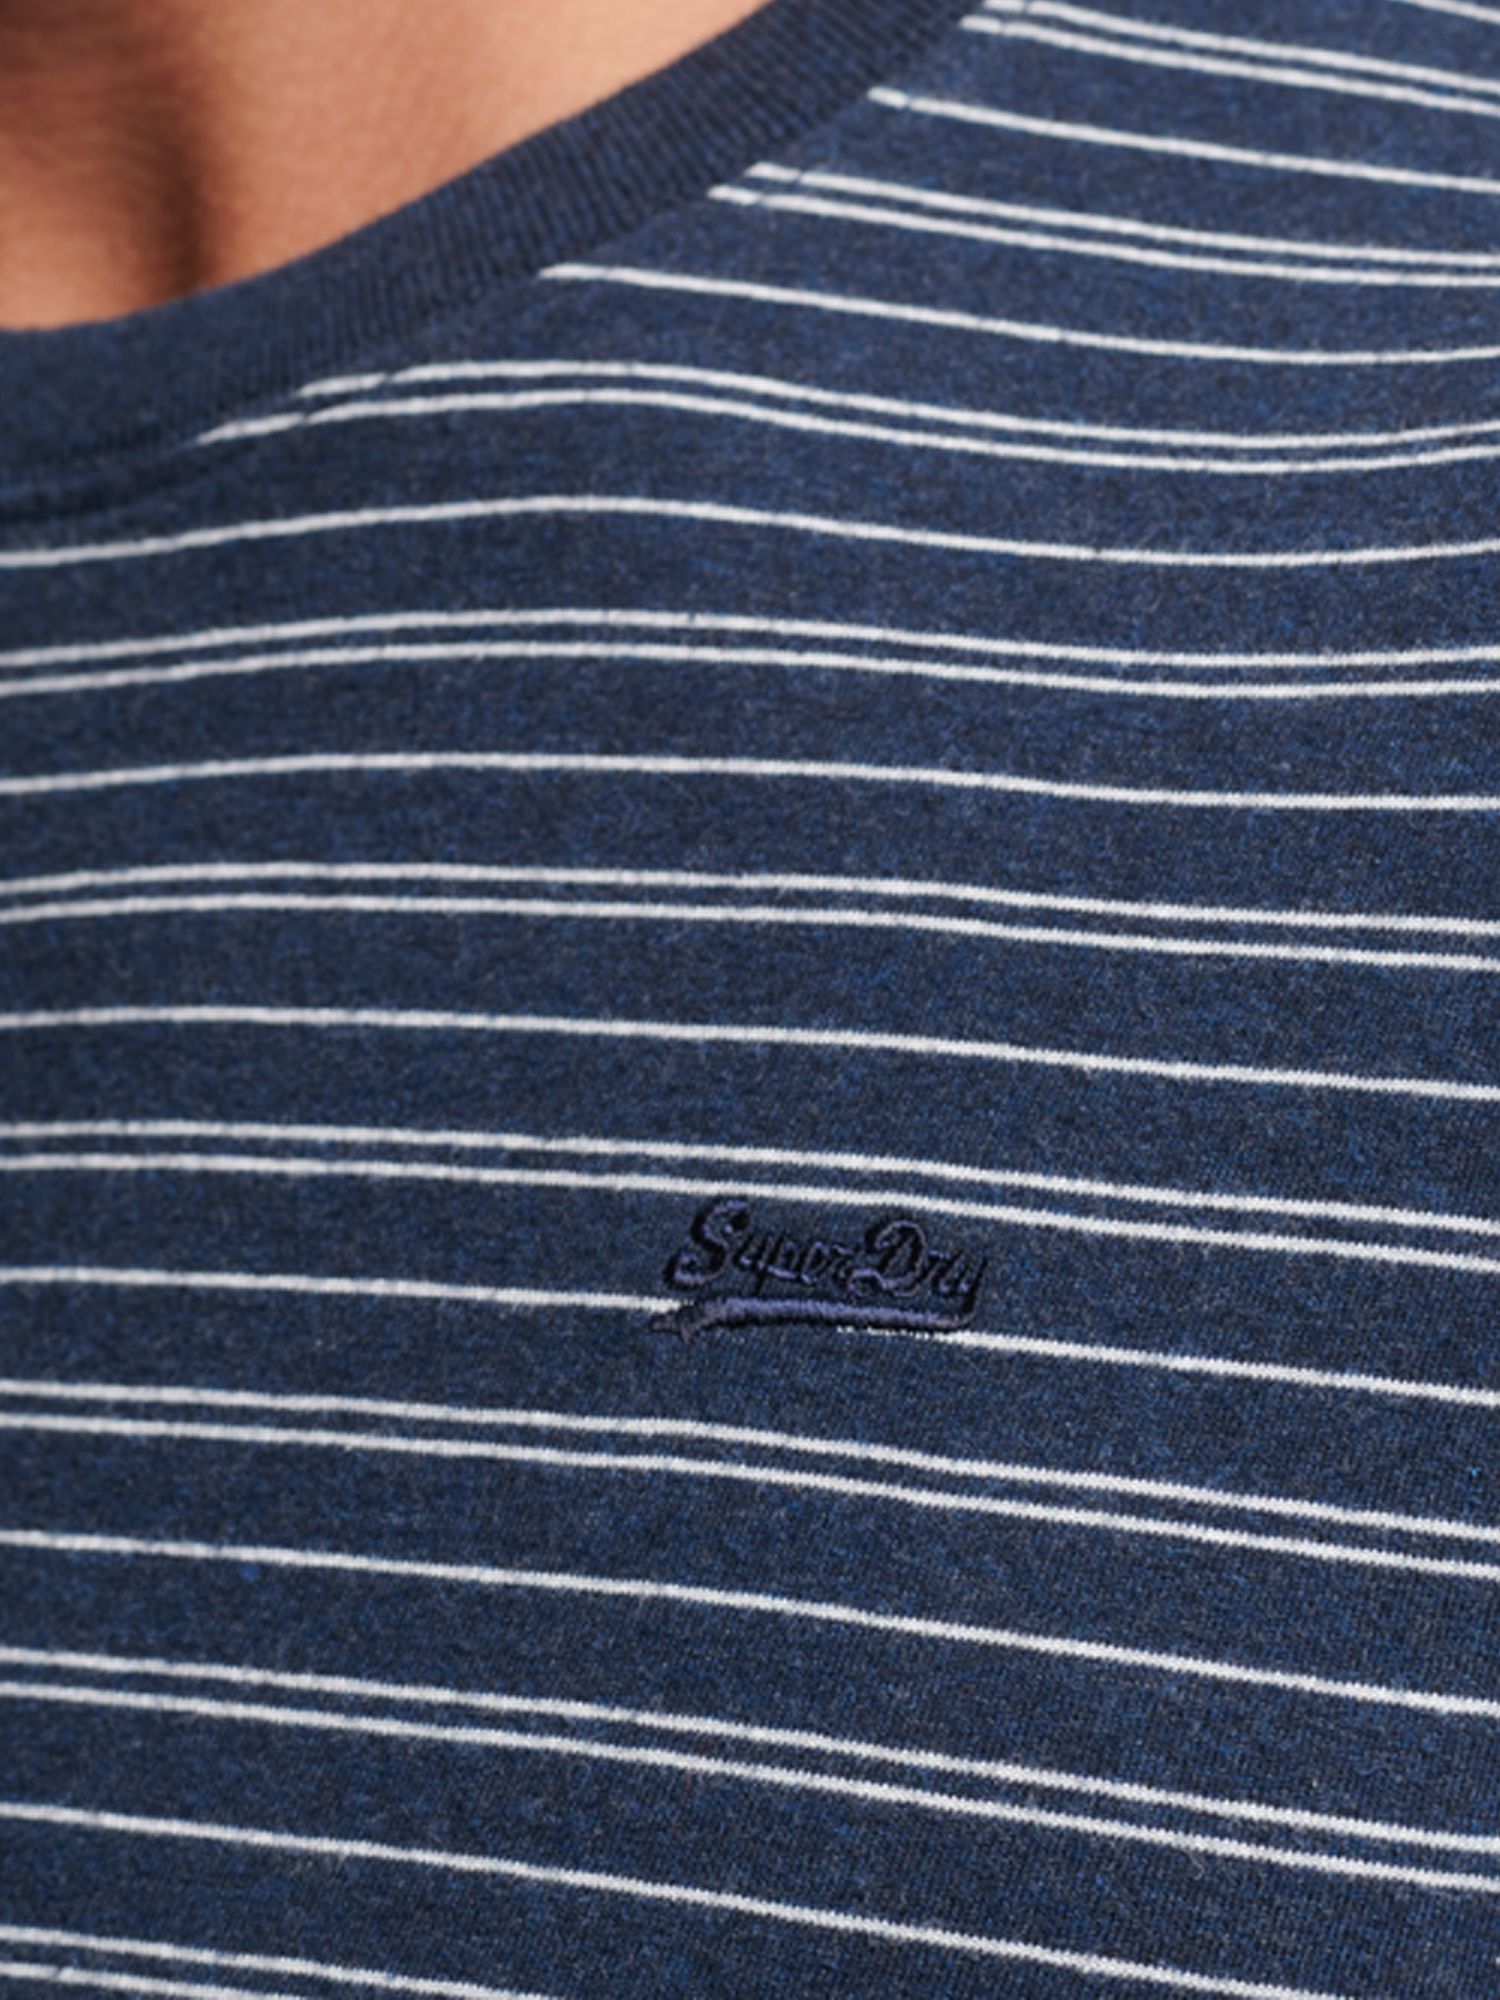 Buy Superdry Organic Cotton Vintage Textured Stripe T-Shirt Online at johnlewis.com